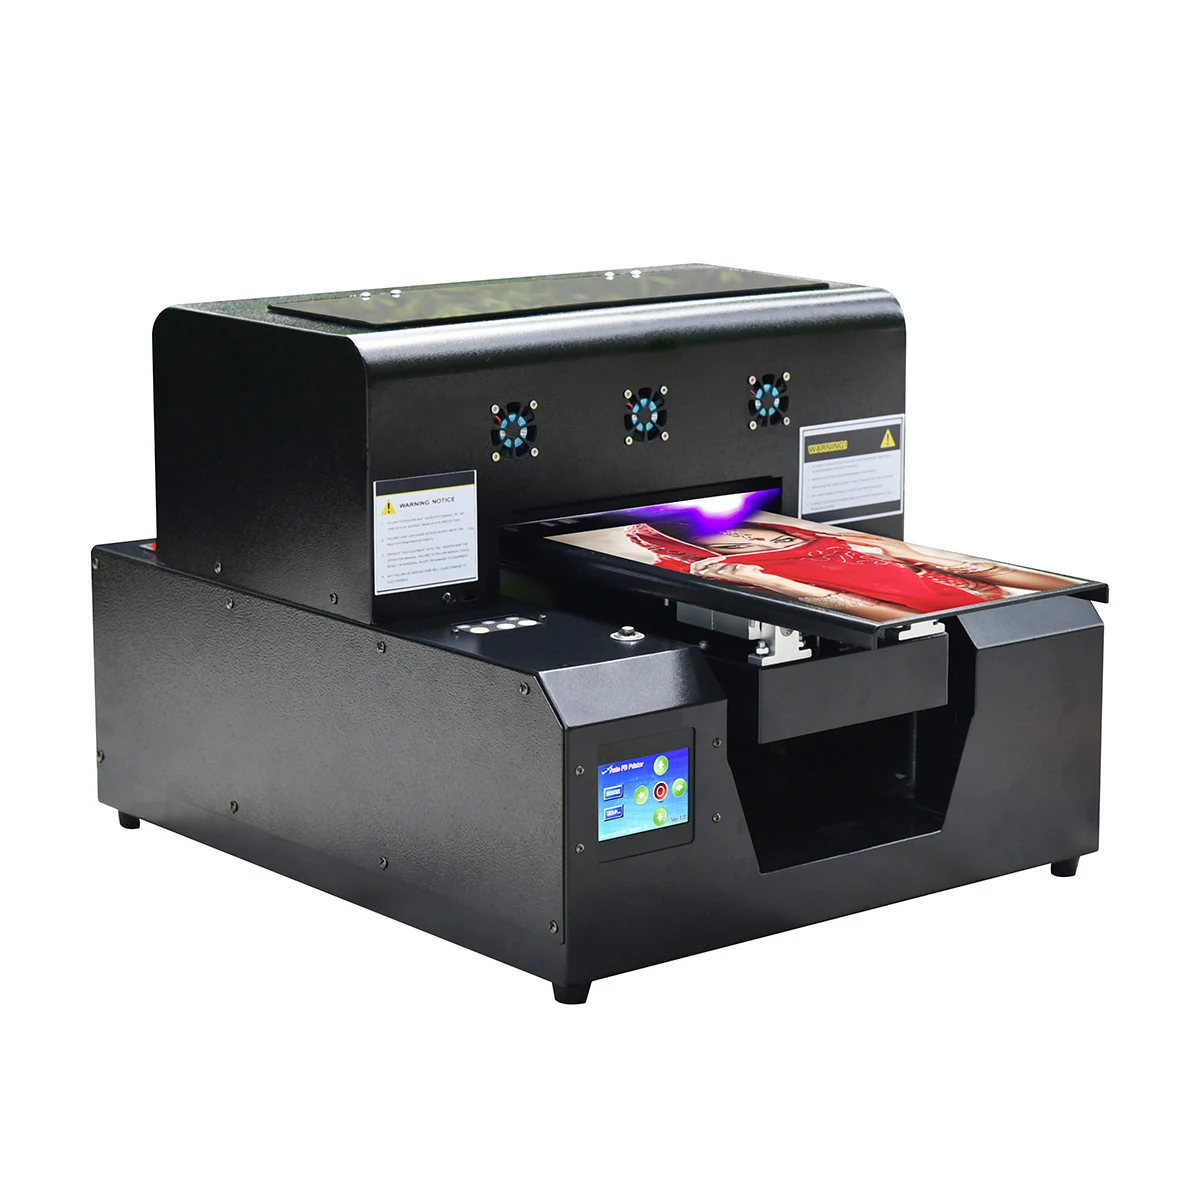 uv printer atm bank business wedding card printing machine